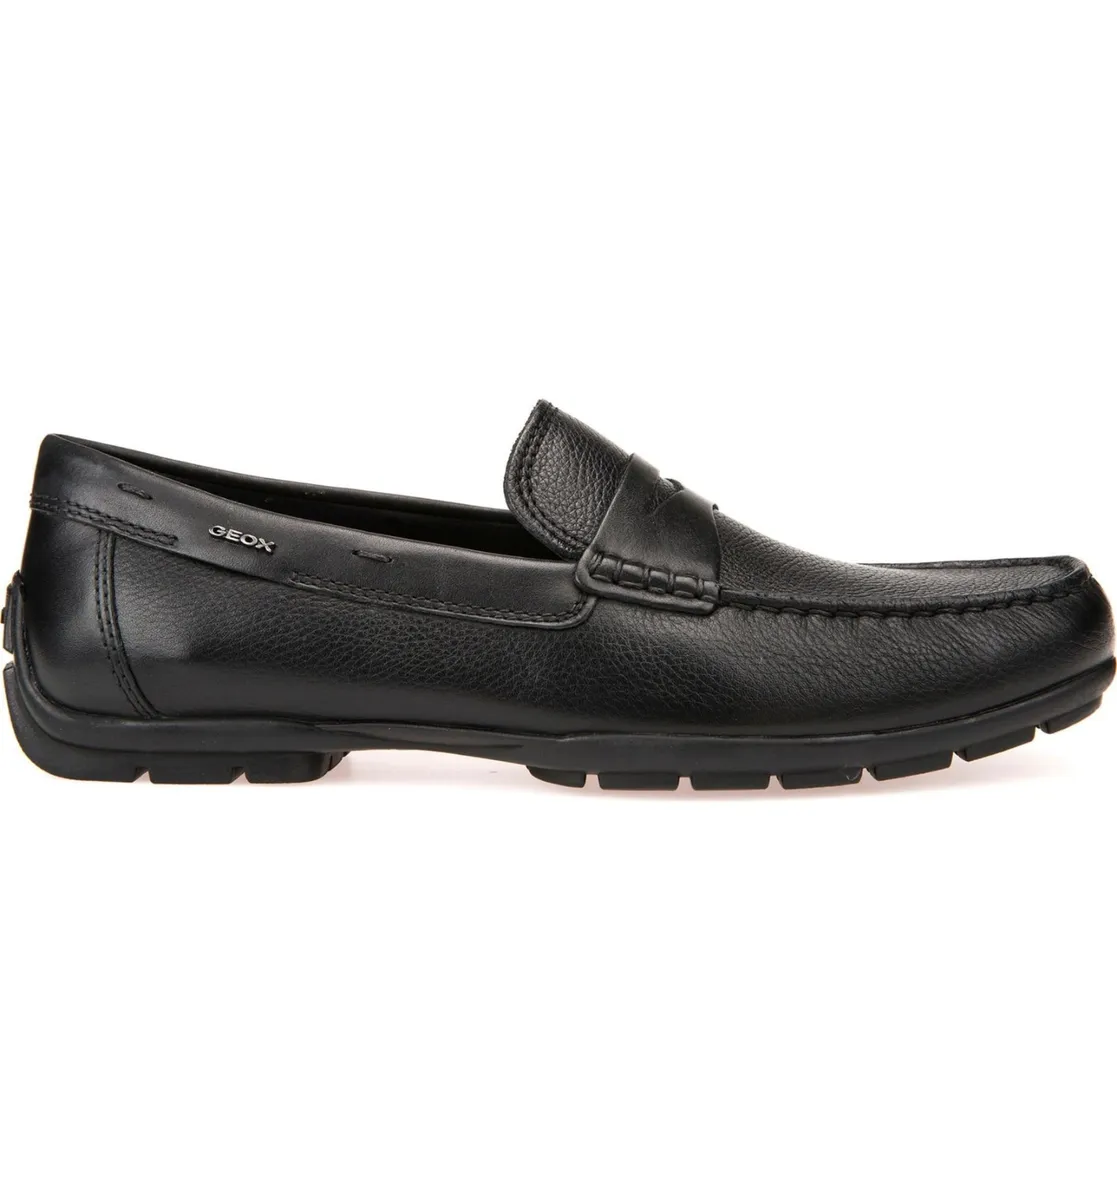 perturbación Ilustrar Simpático Geox Men&#039;s u Moner Mocassin Slip on penny Loafer shoes 2Fit A Black  Leather | eBay